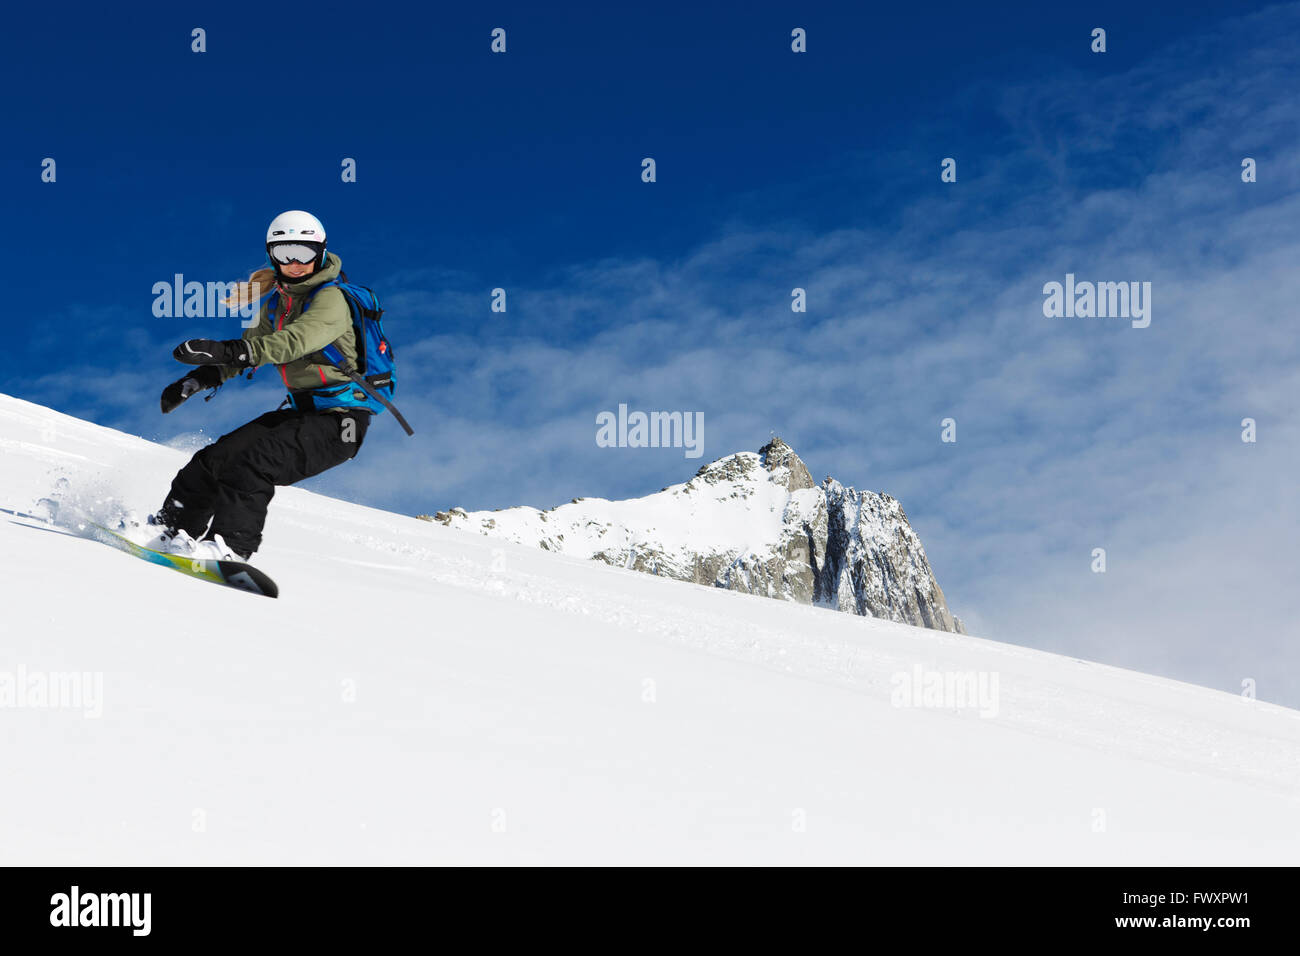 Switzerland, Andermatt, Young woman snowboarding in Alps Stock Photo